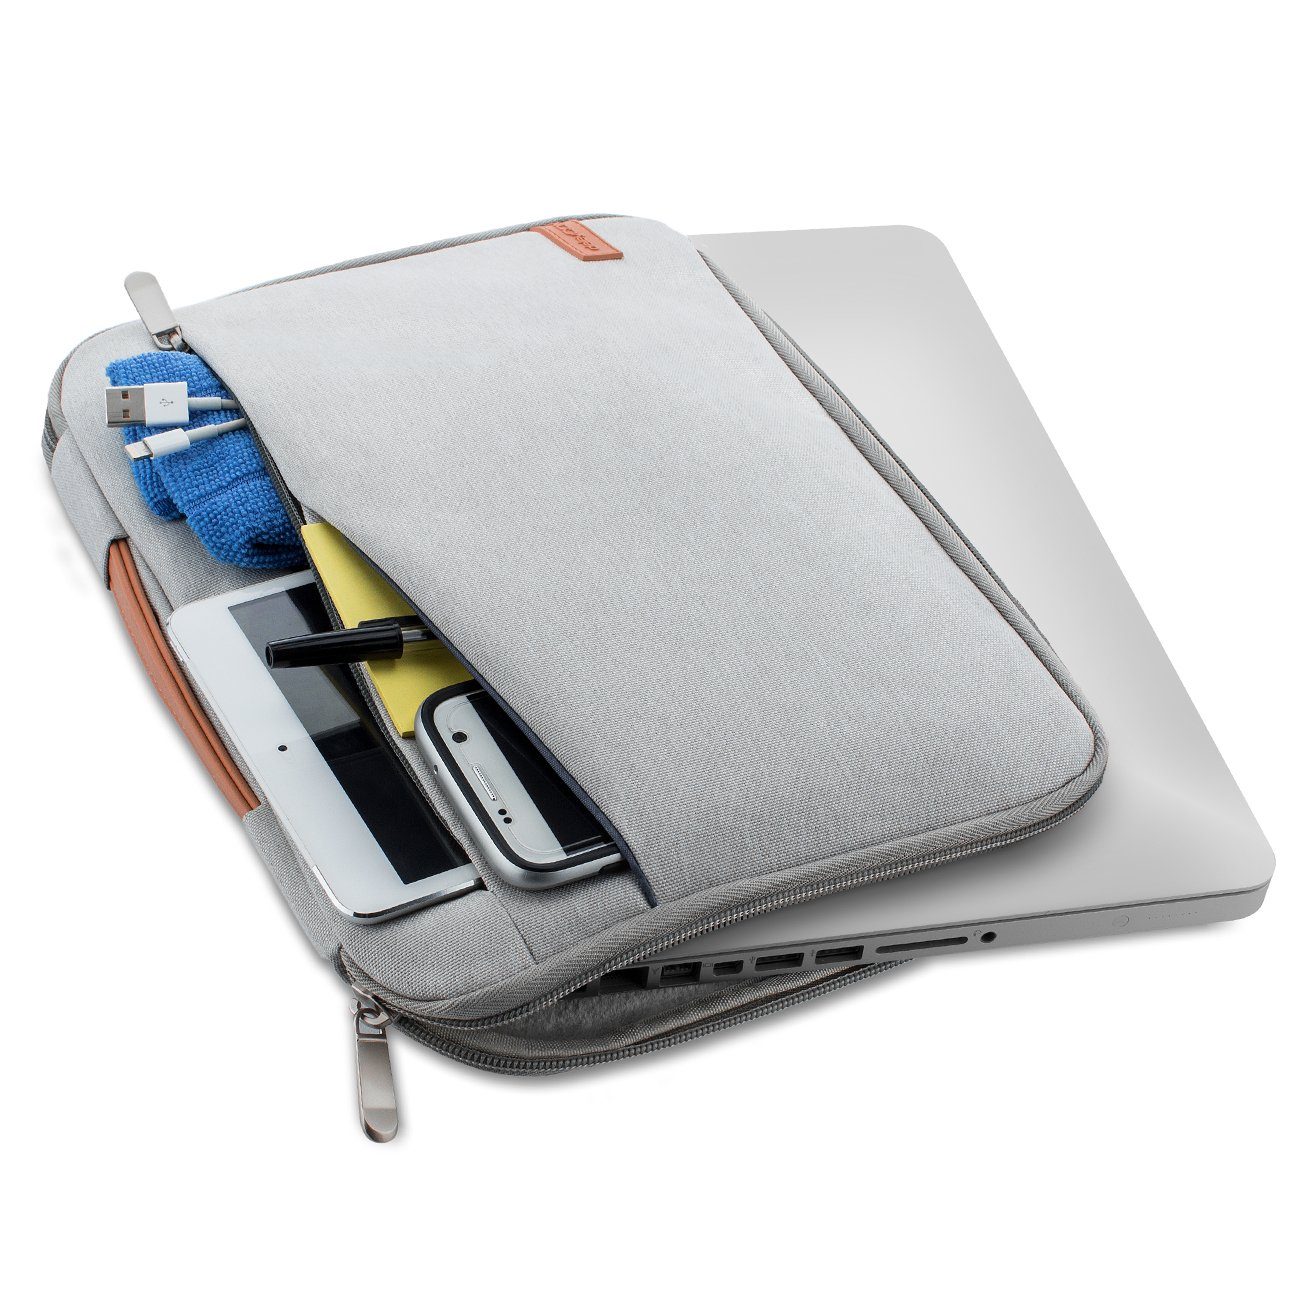 deleyCON deleyCON Laptop Netbook Businesstasche Tasche 15,6“ Zoll (39,6cm) bis Notebook MAC